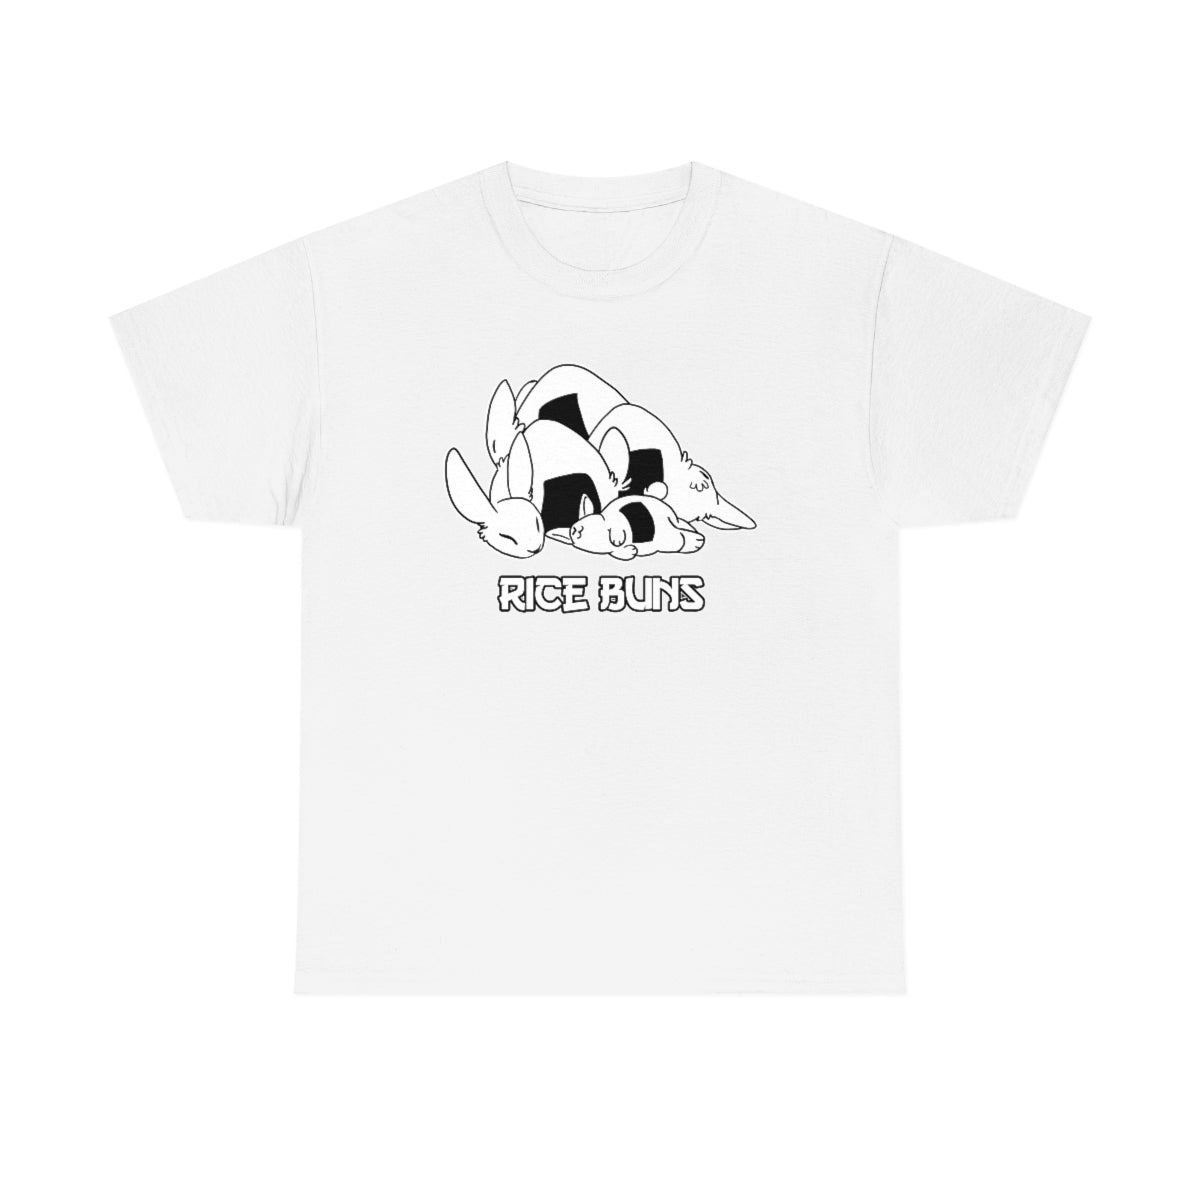 Rice Buns - T-Shirt T-Shirt Crunchy Crowe White S 